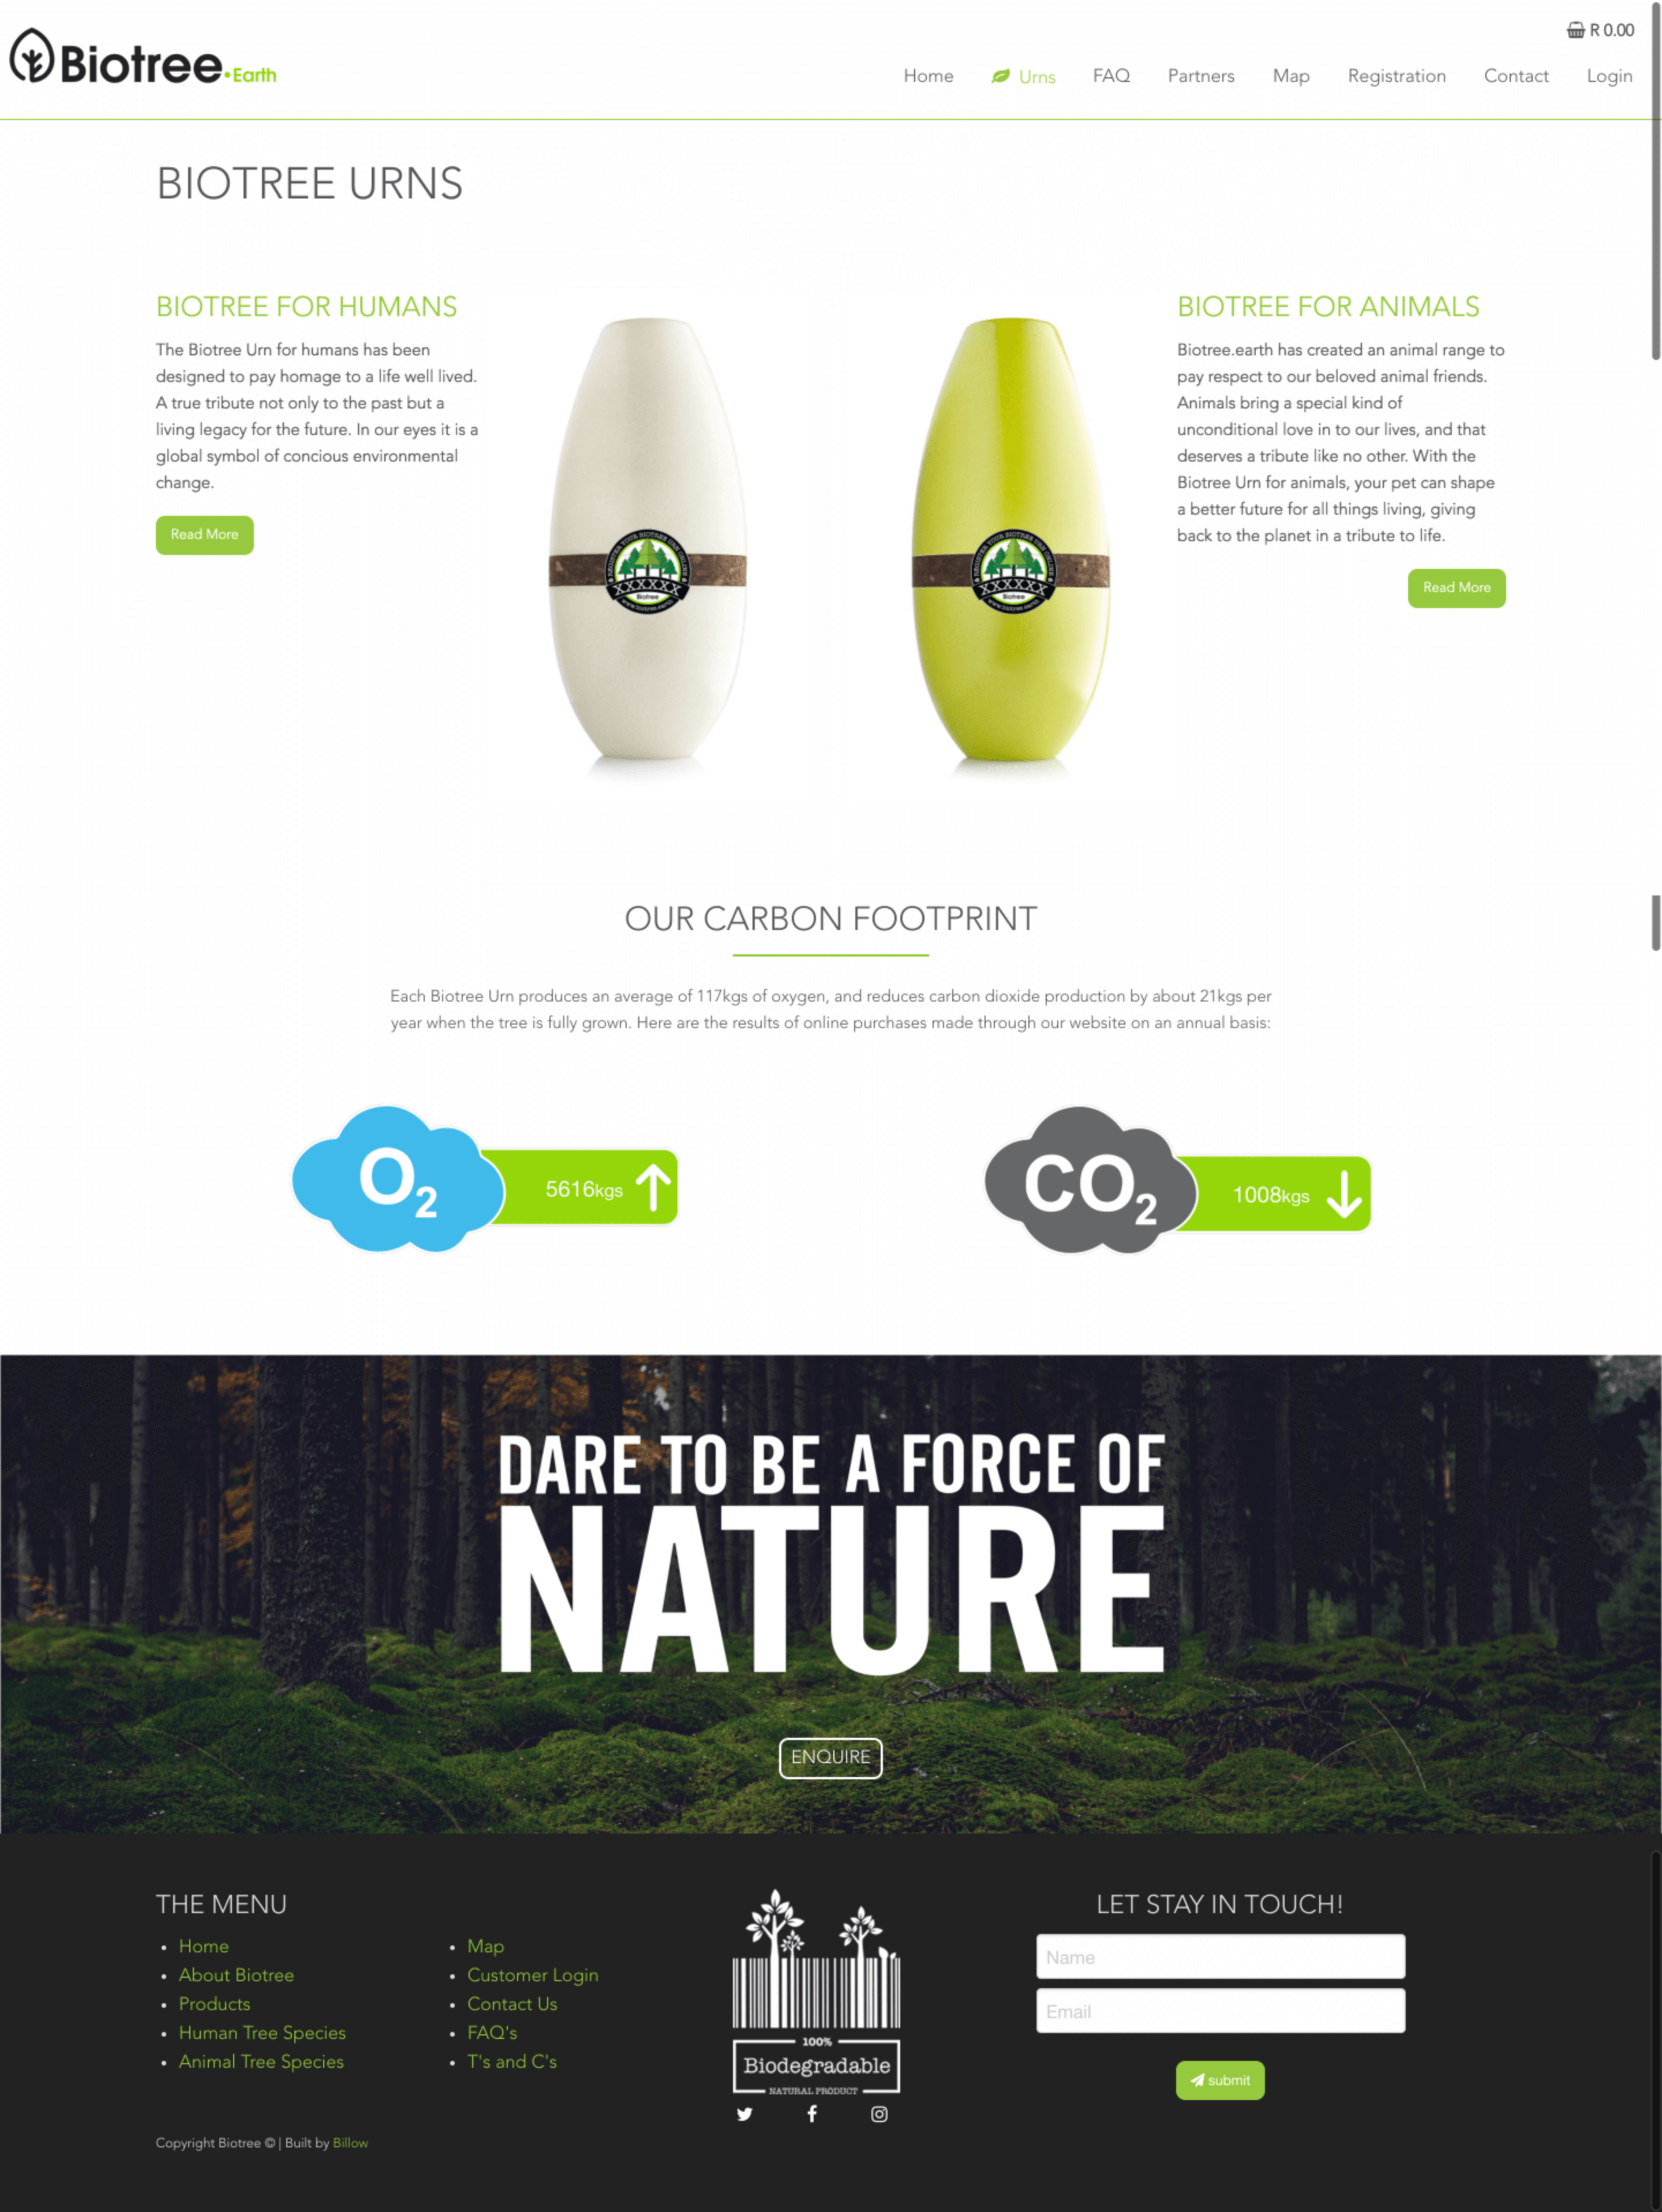 Biotree website by Billow